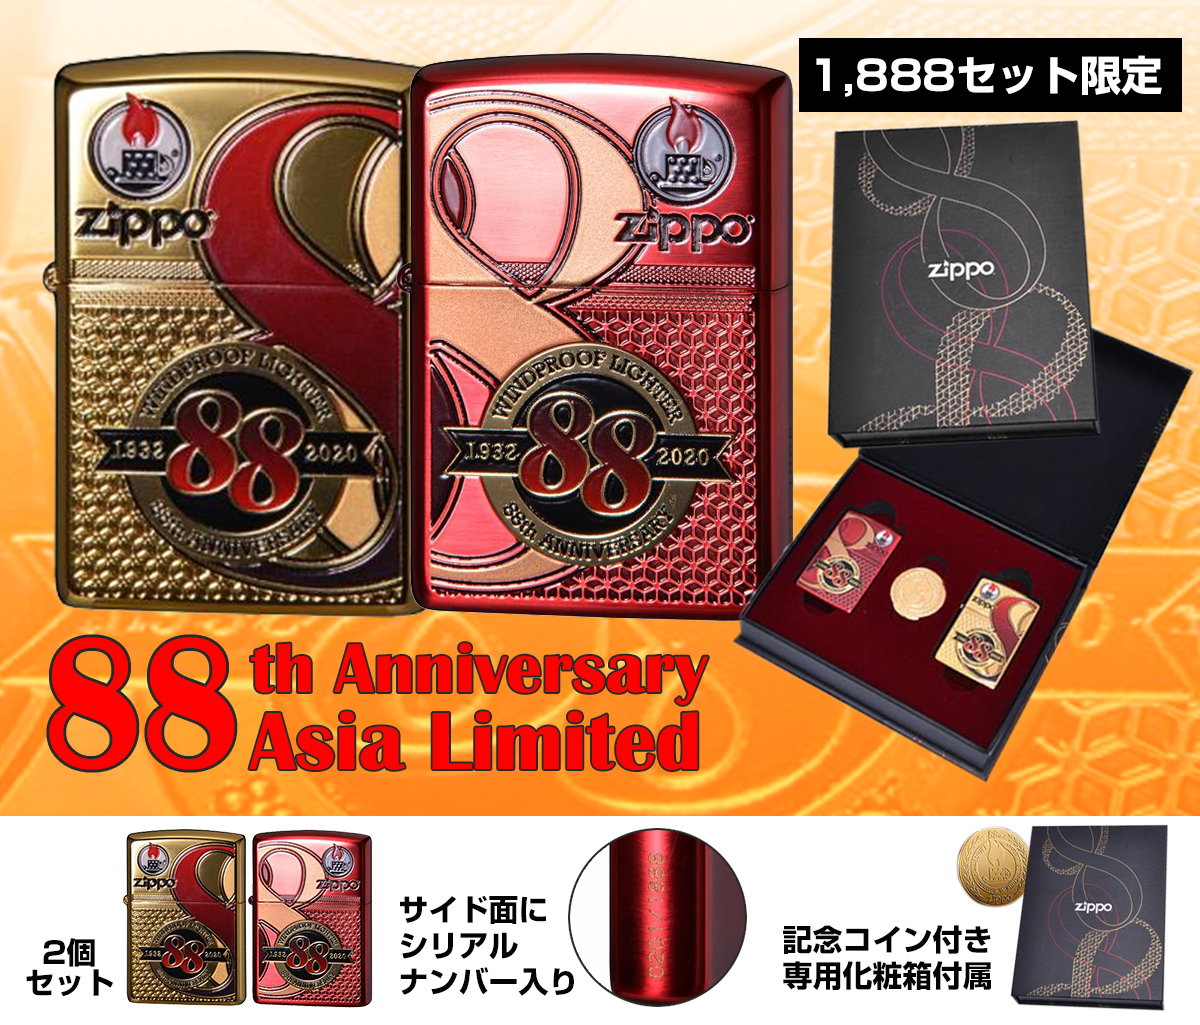 Zippo ジッポー Zippo社創業88周年記念 1,888個アジア限定モデル 88th Anniversary Asia Limited ZA-2-147C